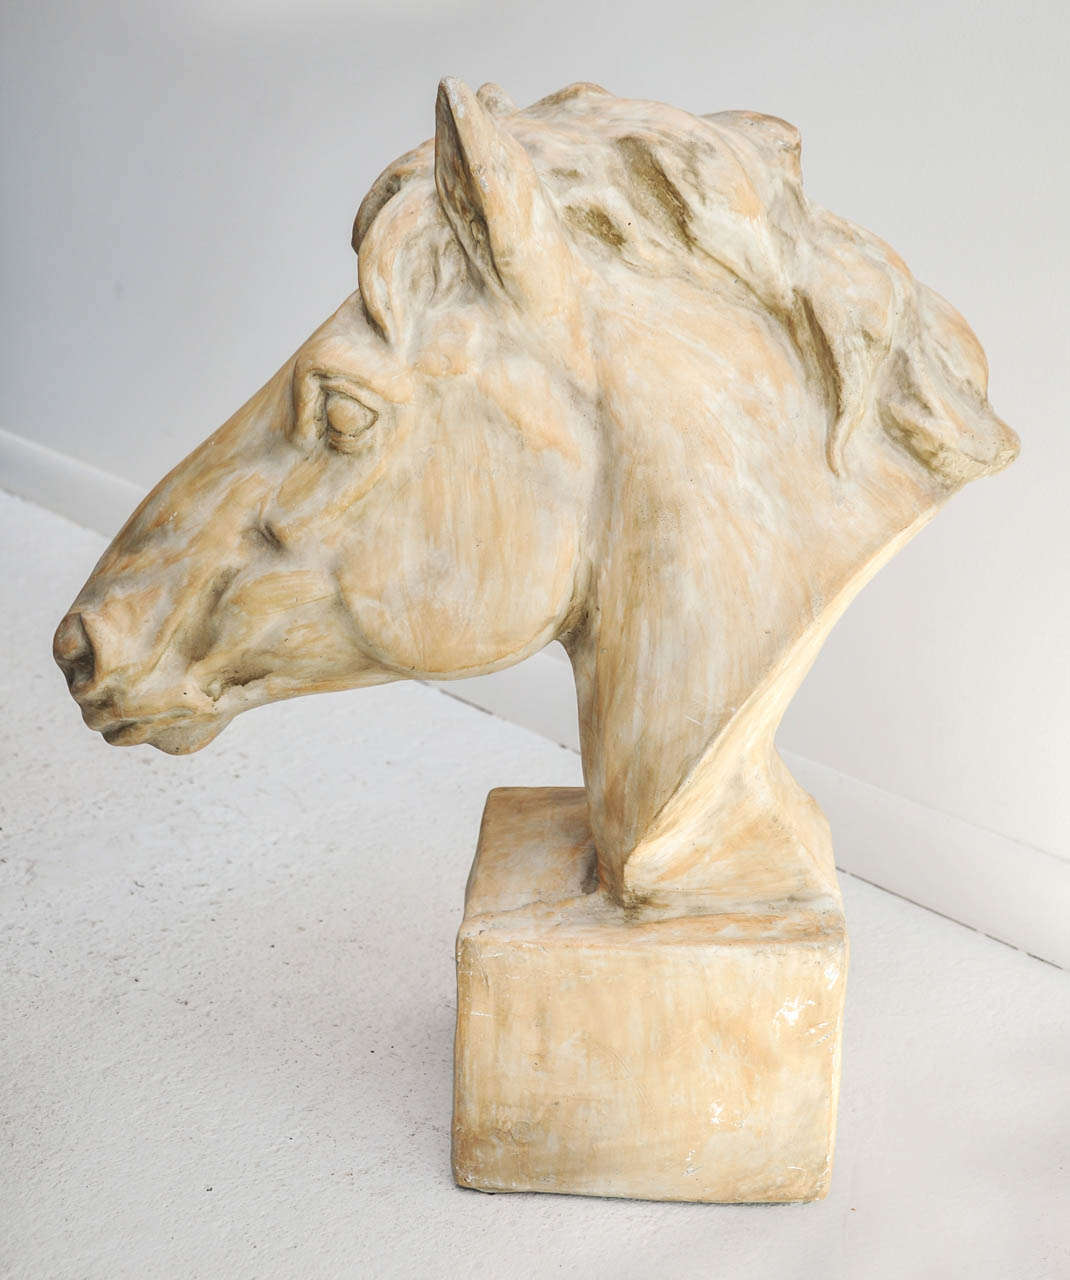 Horsehead sculpture